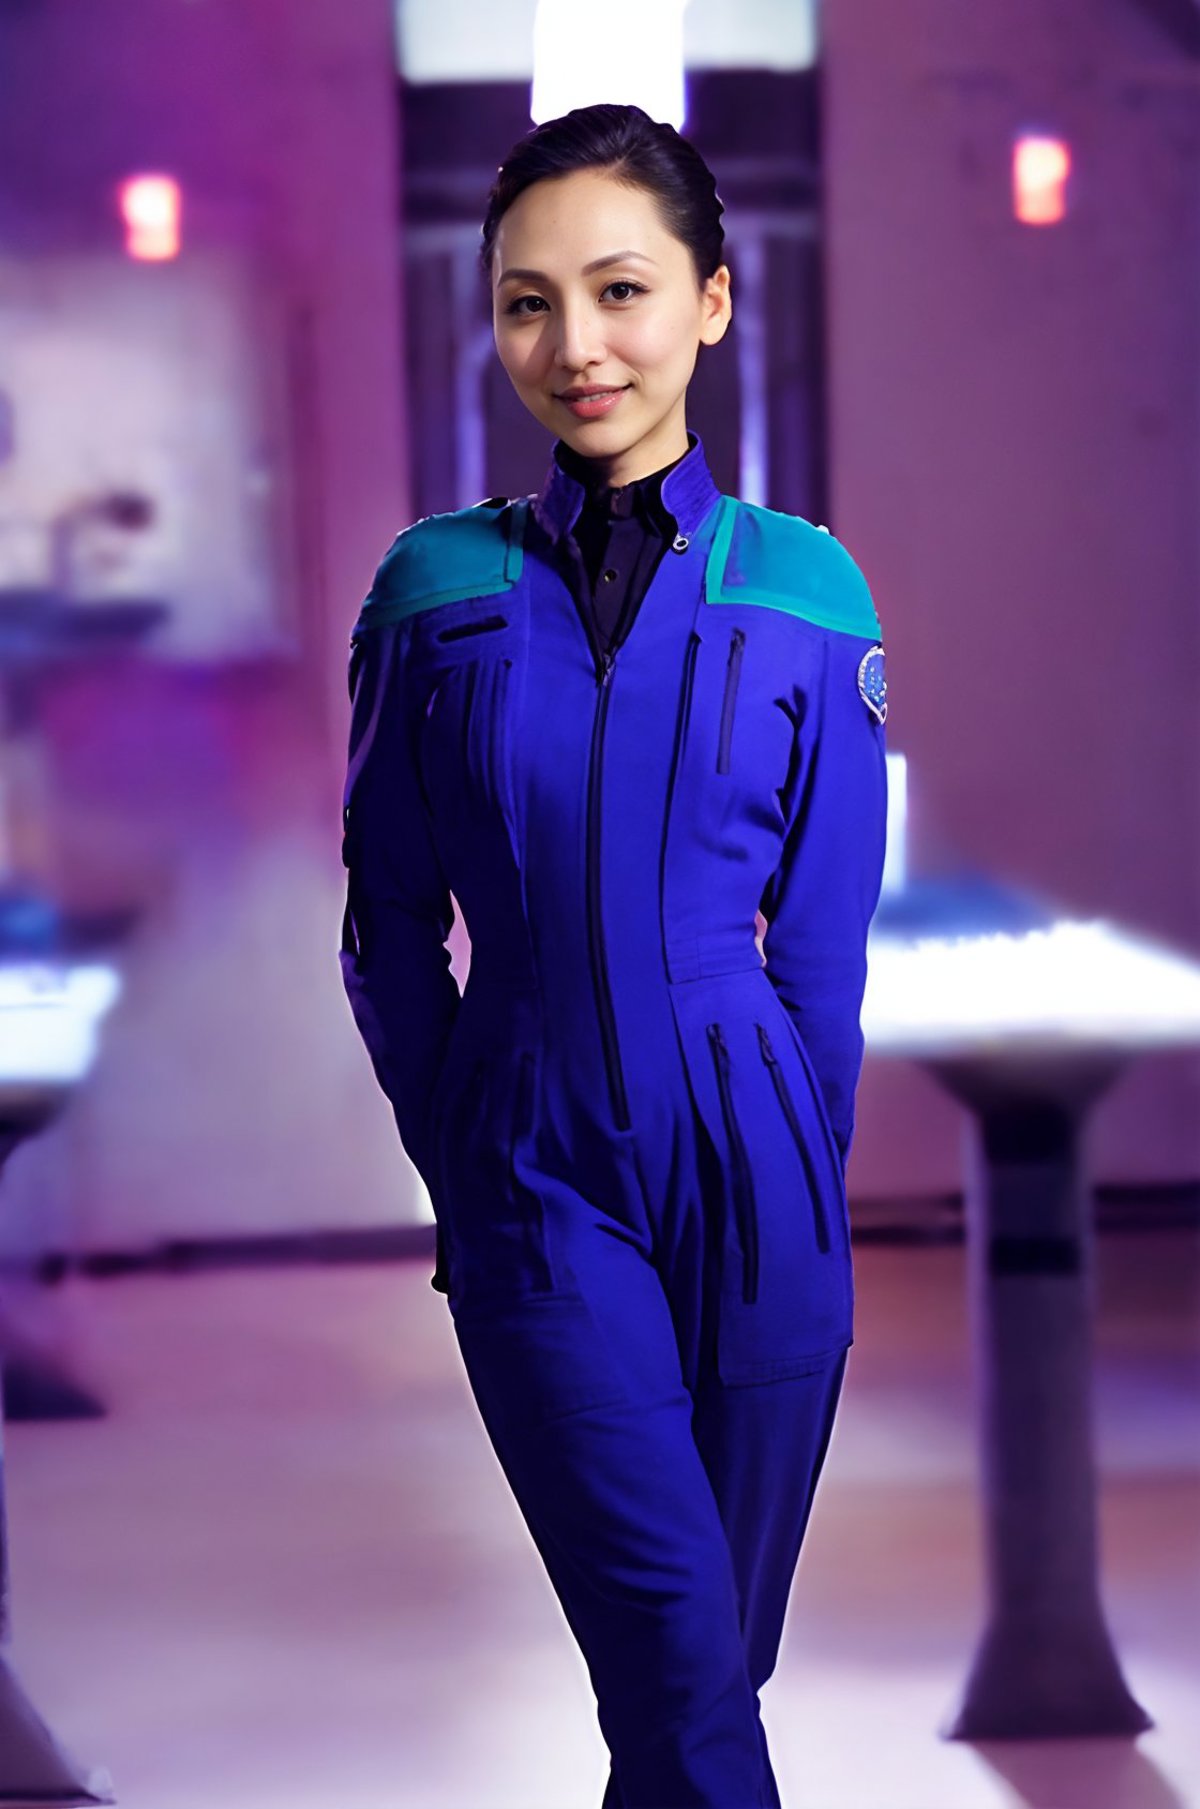 Star Trek: Enterprise NX-01 Uniform LoRA image by SirDigsbey